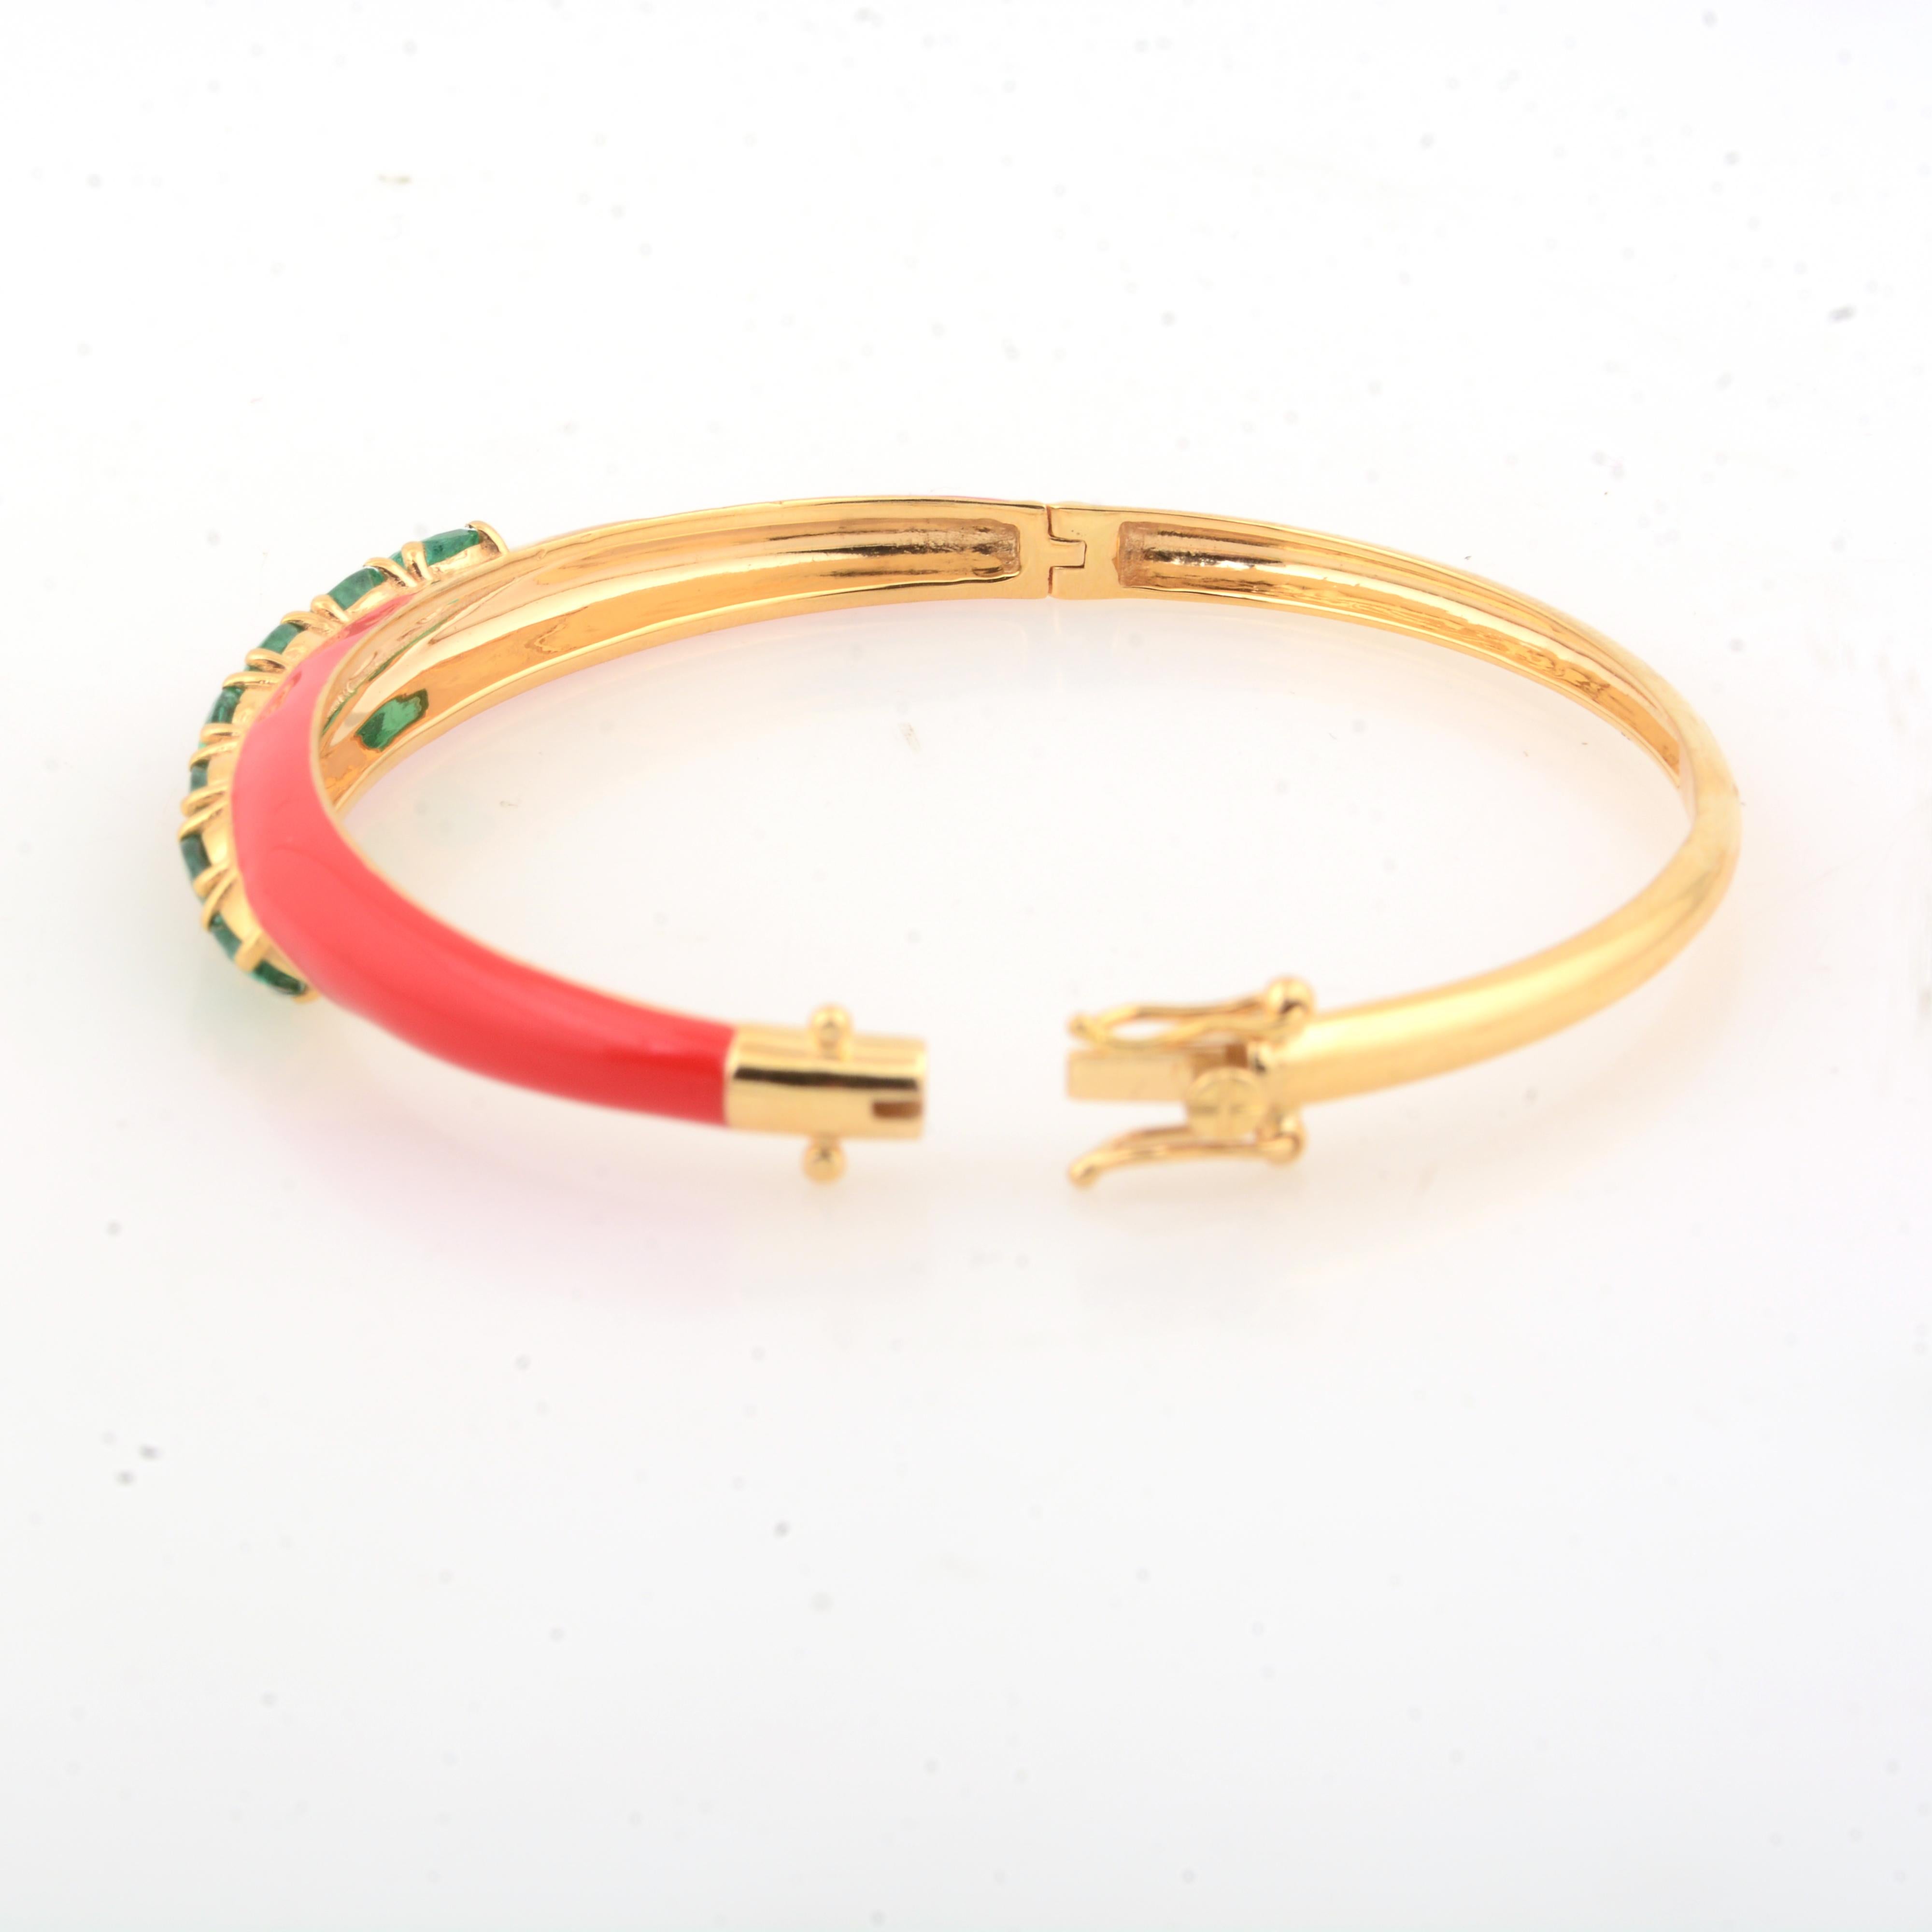 Oval Cut 2.27 Carat Natural Emerald Enamel Bangle Bracelet 14 Karat Yellow Gold Jewelry For Sale